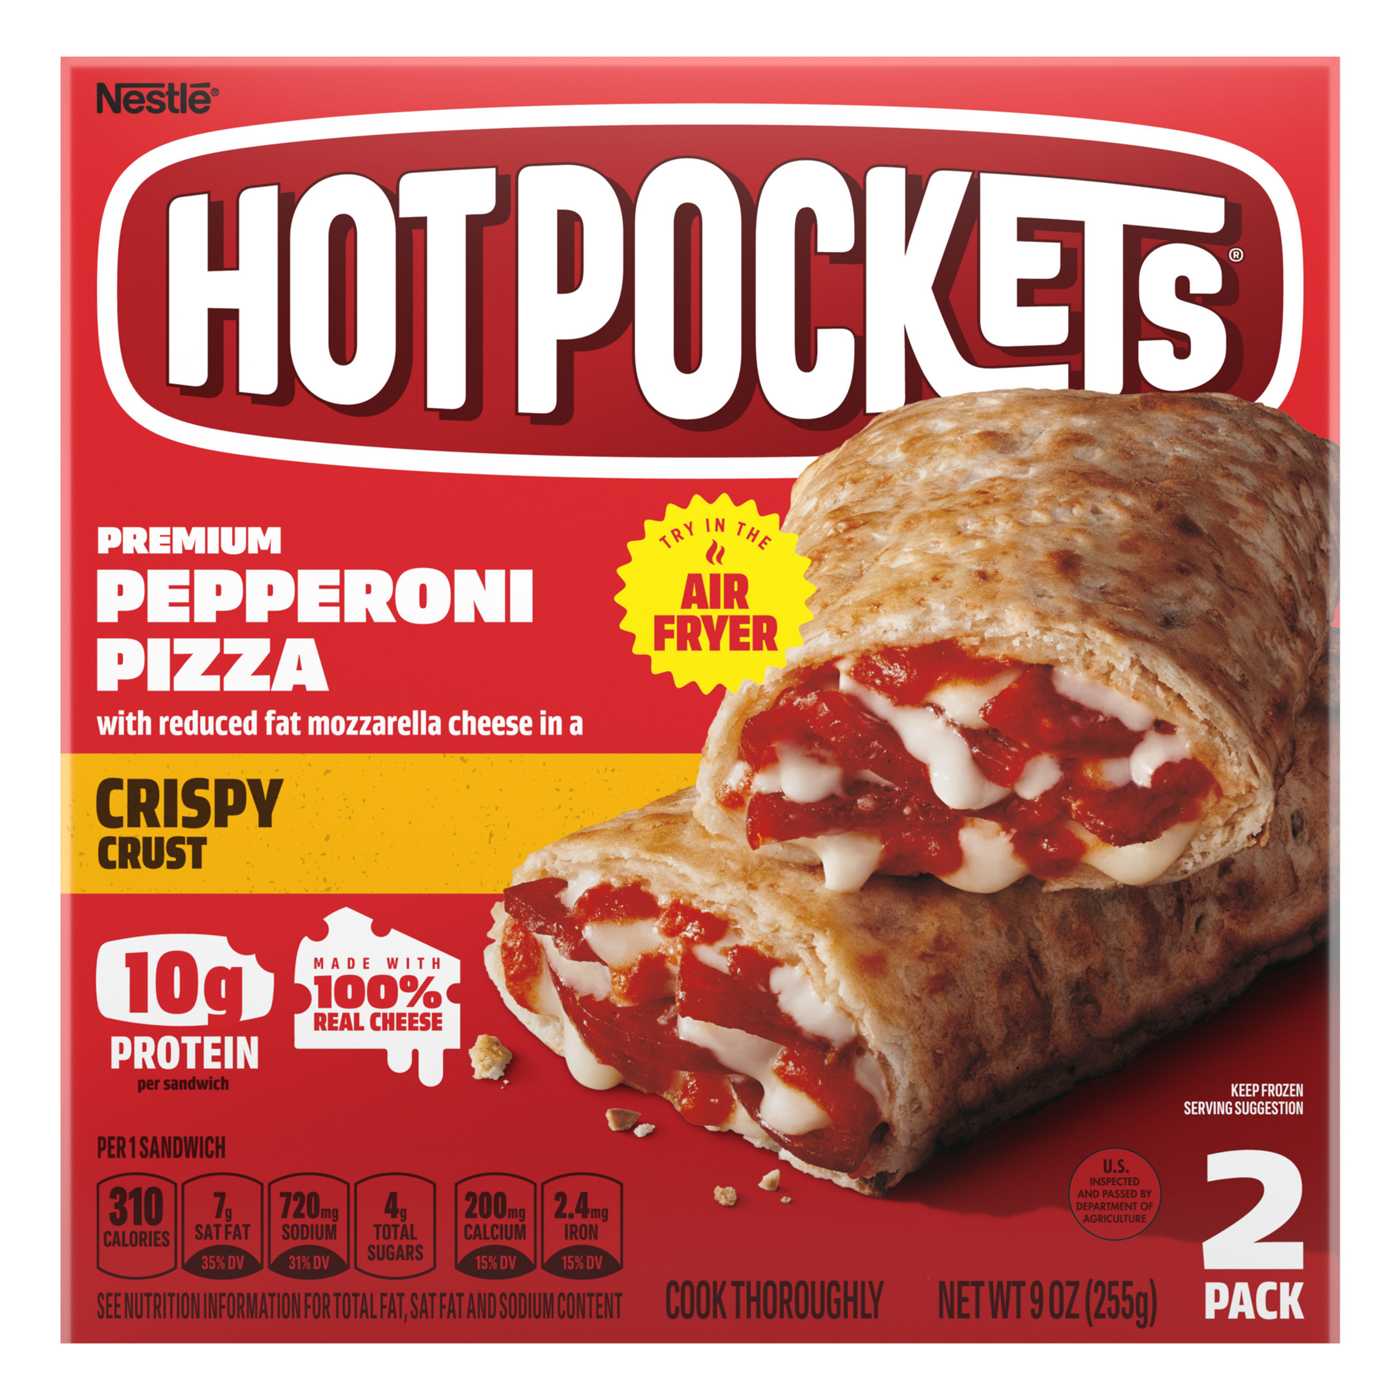 Hot Pockets Pepperoni Pizza Frozen Sandwiches - Crispy Crust; image 1 of 6